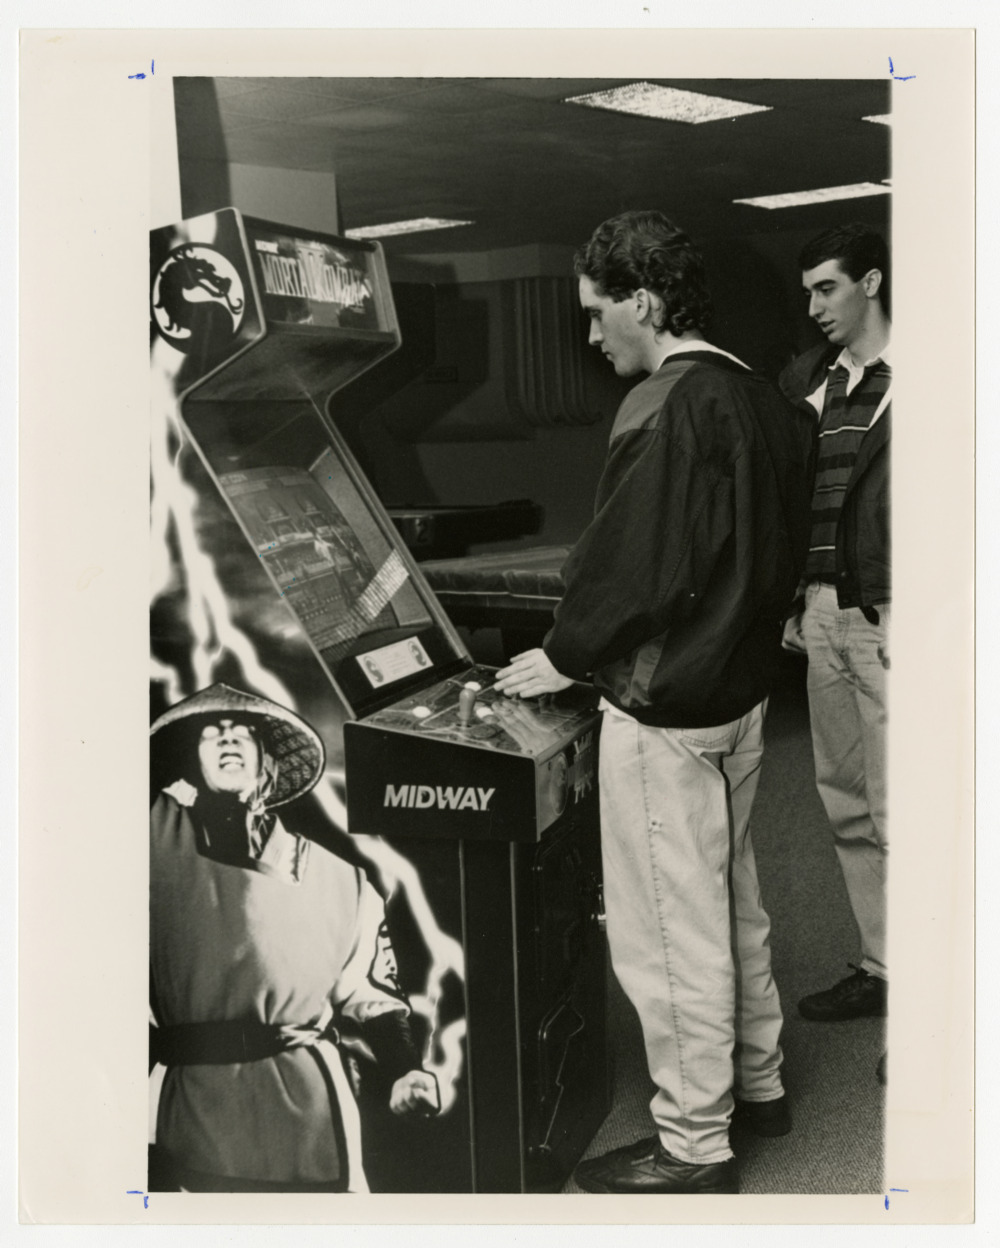 Students played popular games like PAC Man and Mortal Kombat at the local arcades.